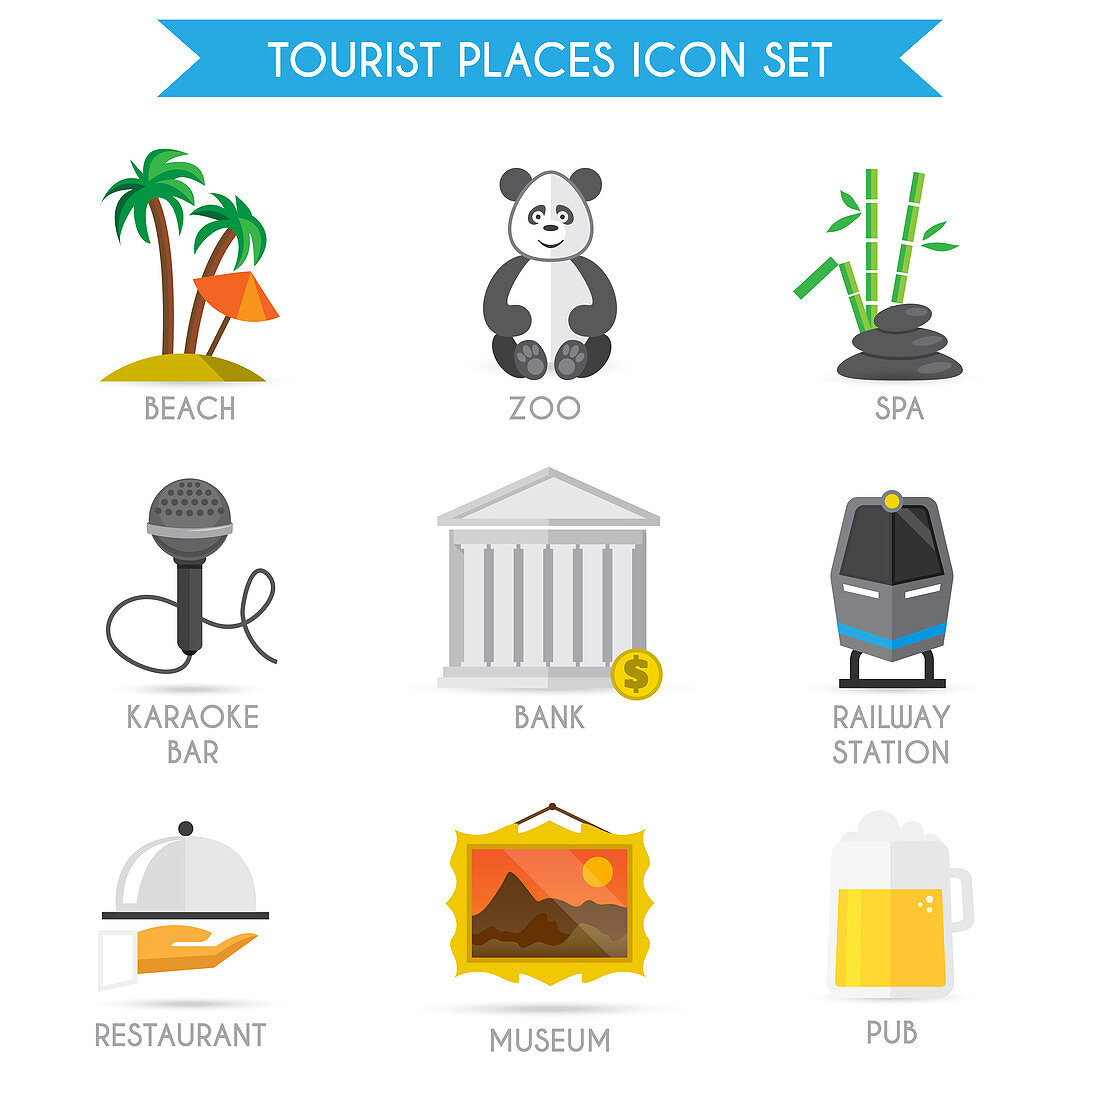 Tourism icons, illustration